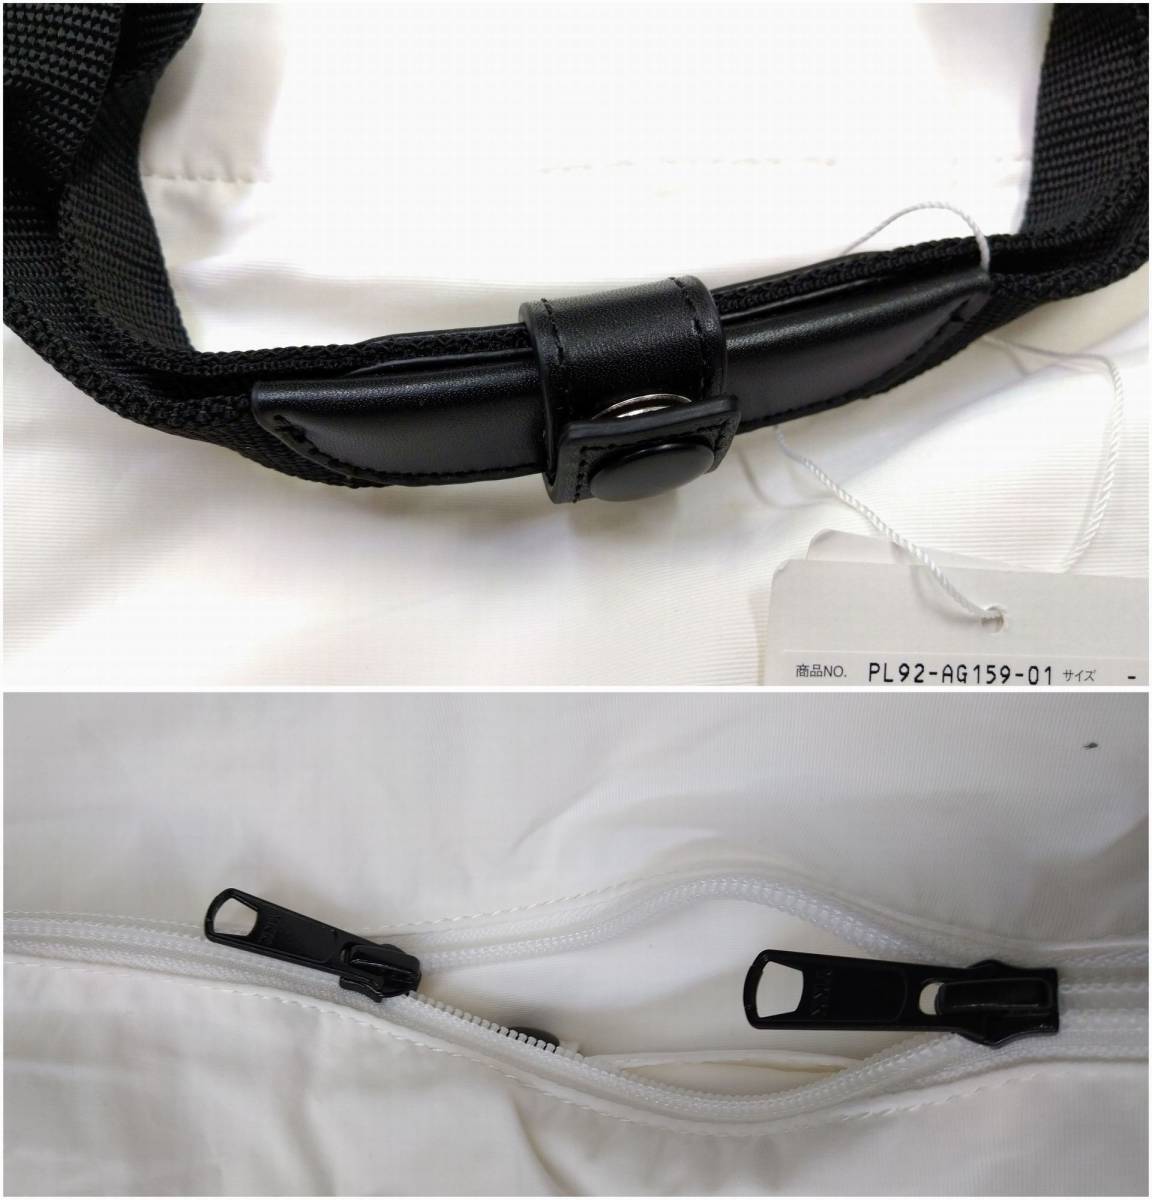  unused tag attaching Plantation side fastener rucksack rucksack light weight nylon white × black 